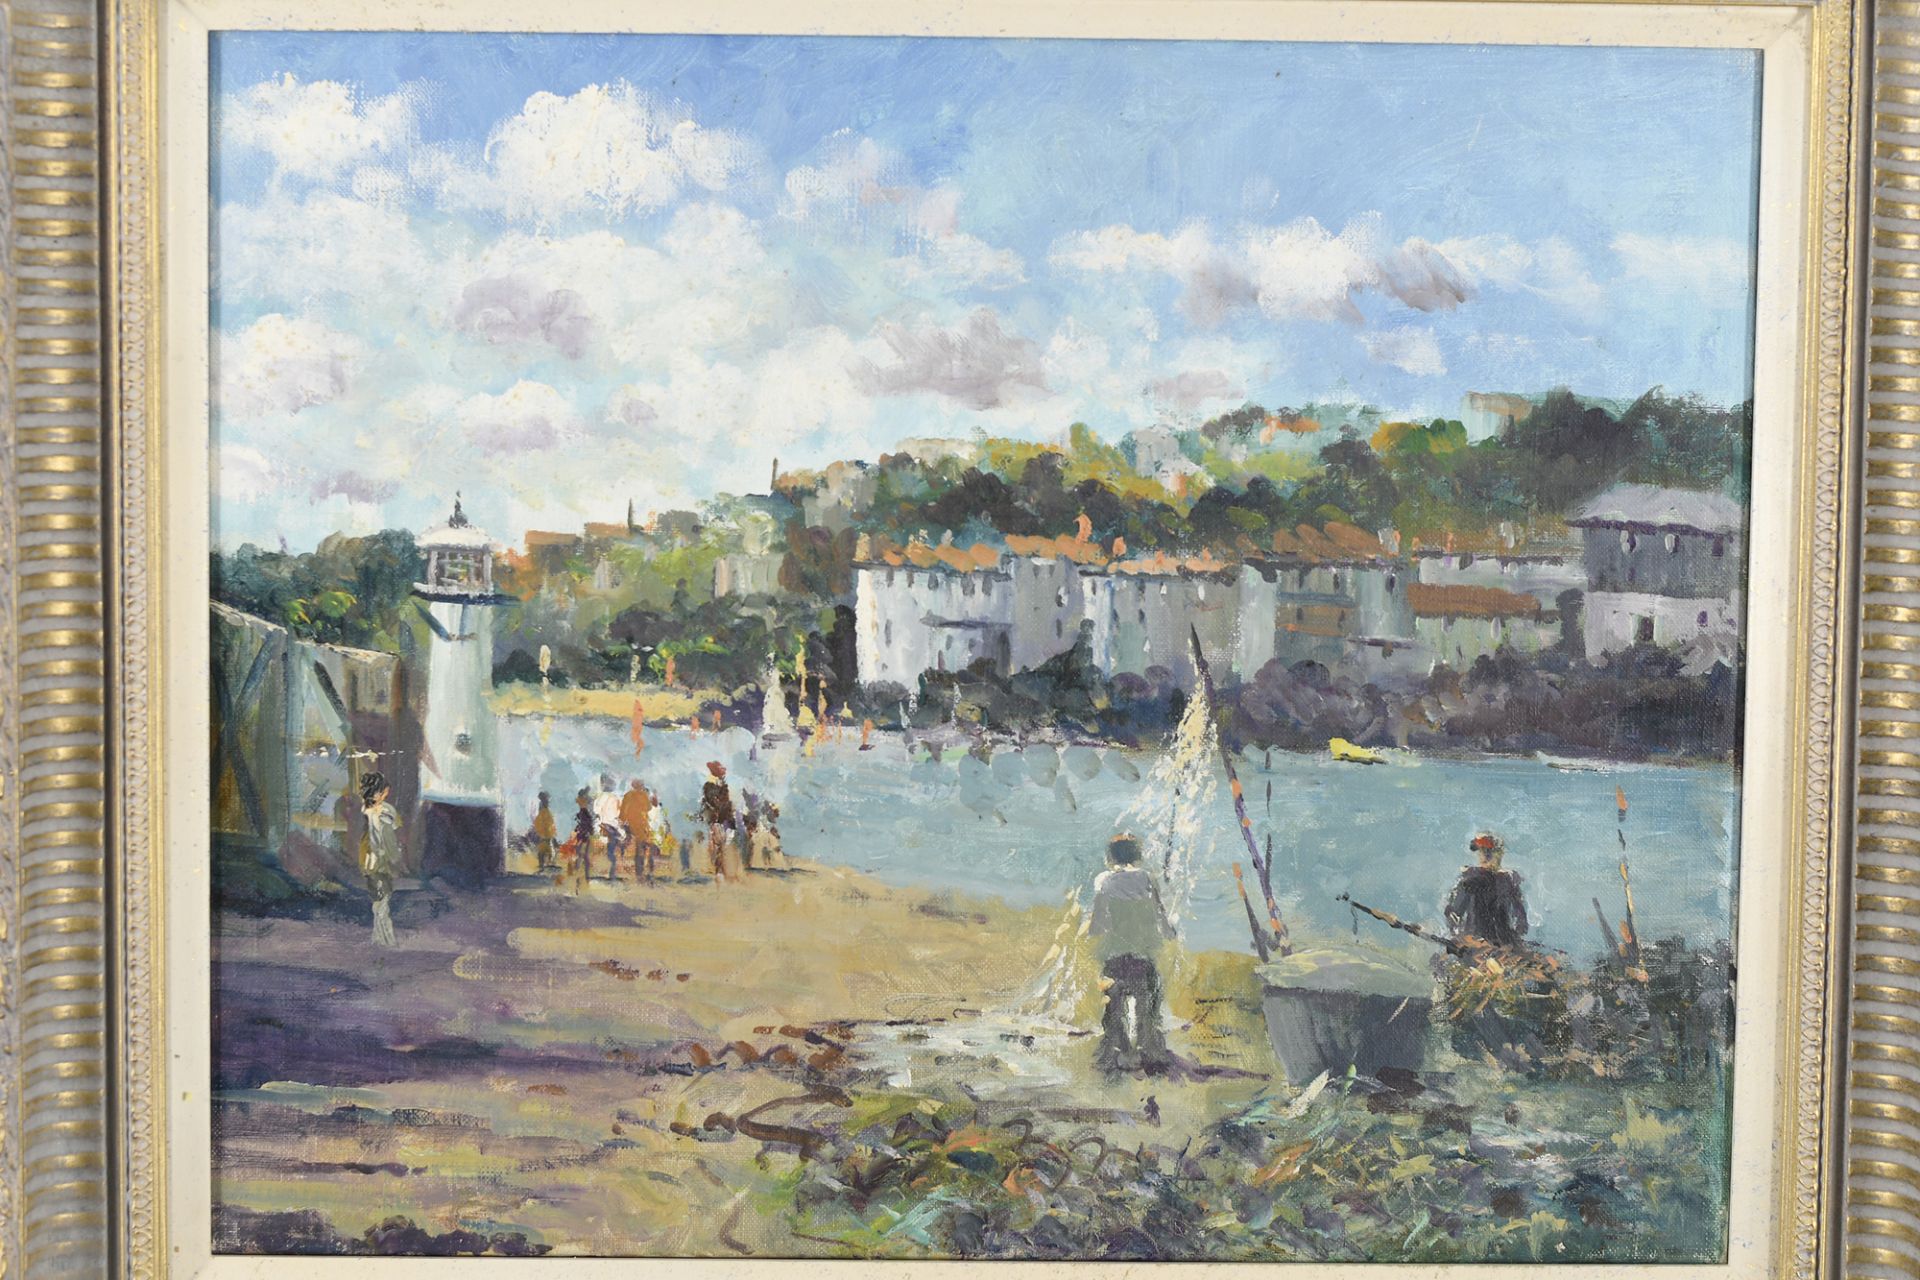 John Ambrose Original Oil on Canvas - Image 2 of 8